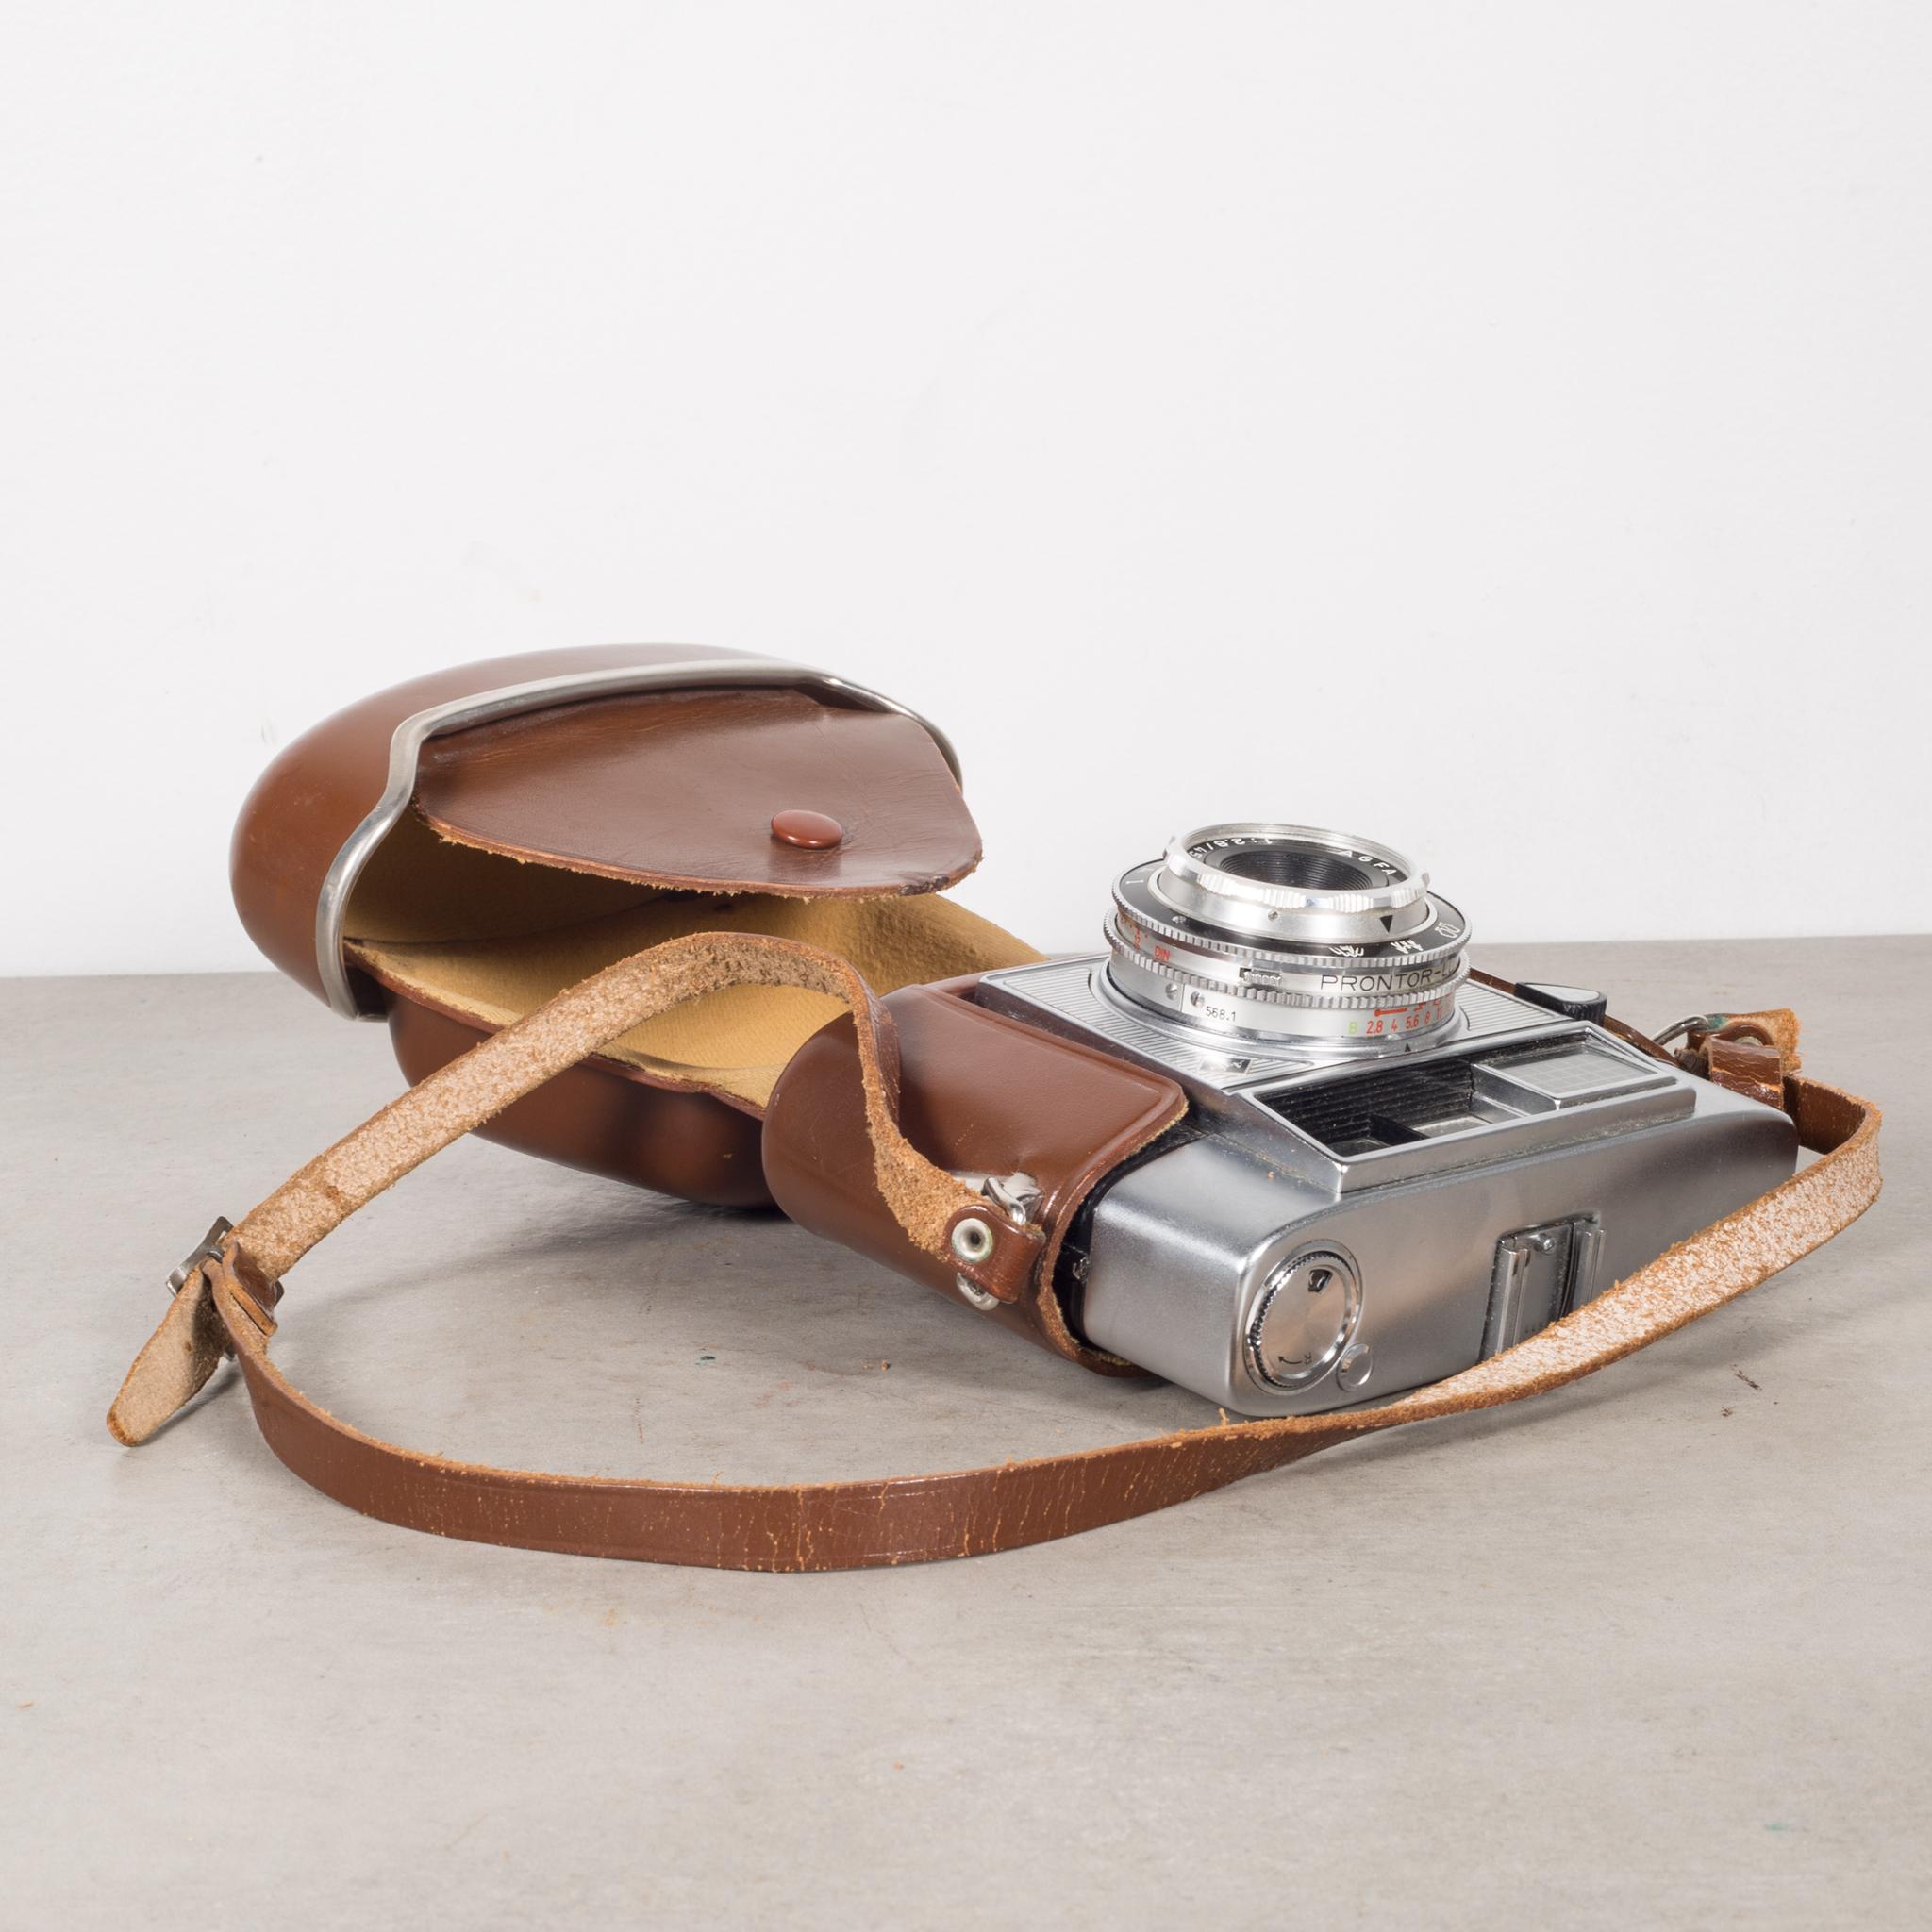 20th Century AGFA Optima 1 Camera with Original Leather Case, circa 1960